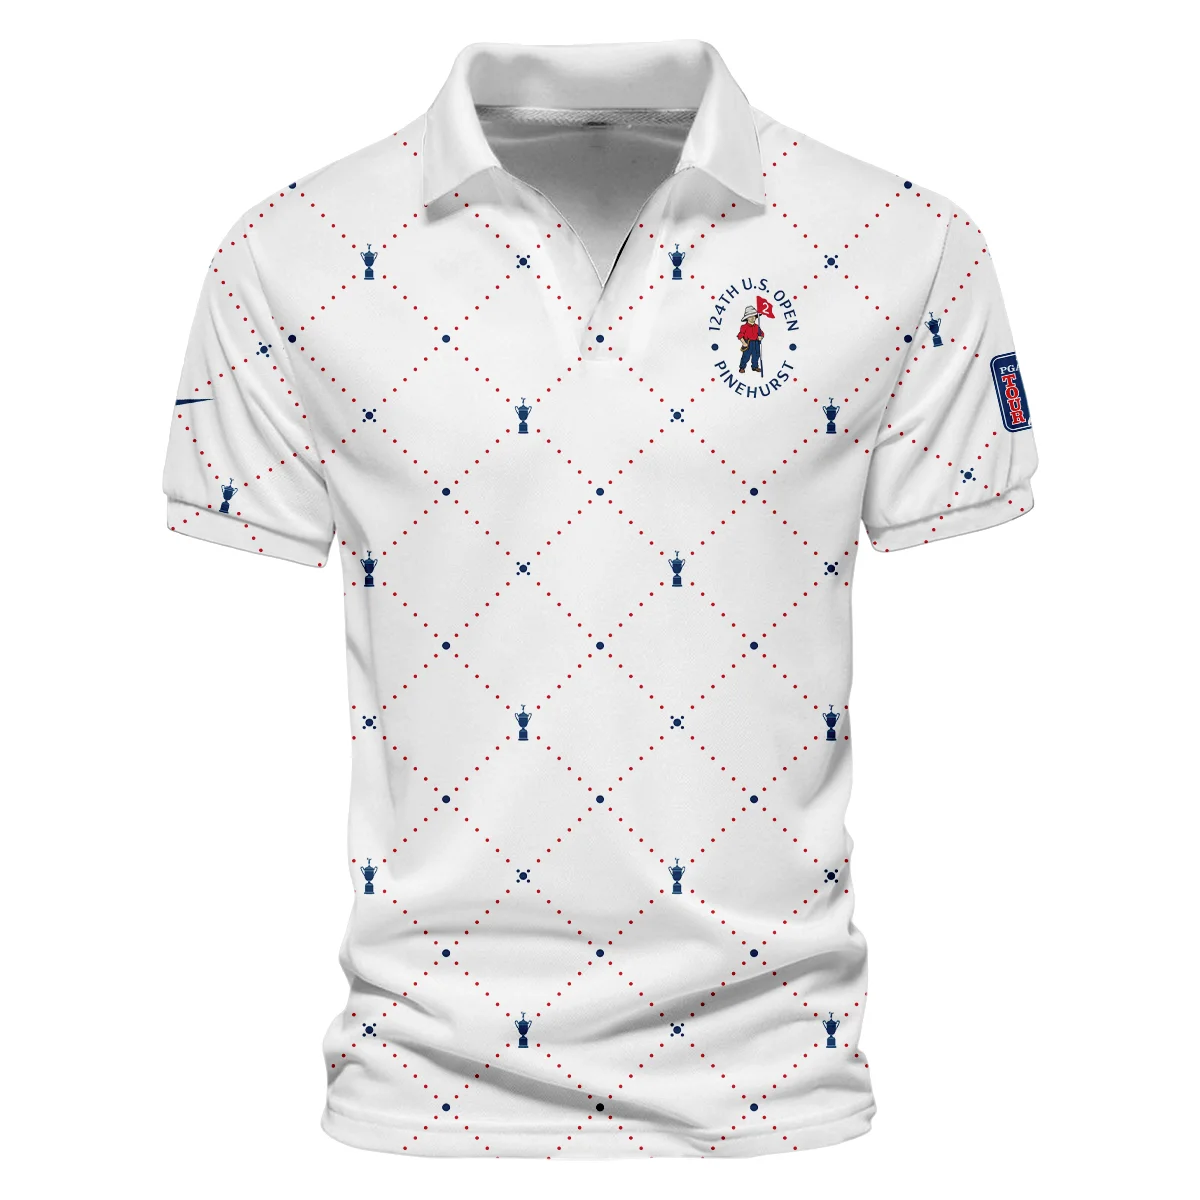 Argyle Pattern With Cup 124th U.S. Open Pinehurst Nike Zipper Polo Shirt Style Classic Zipper Polo Shirt For Men